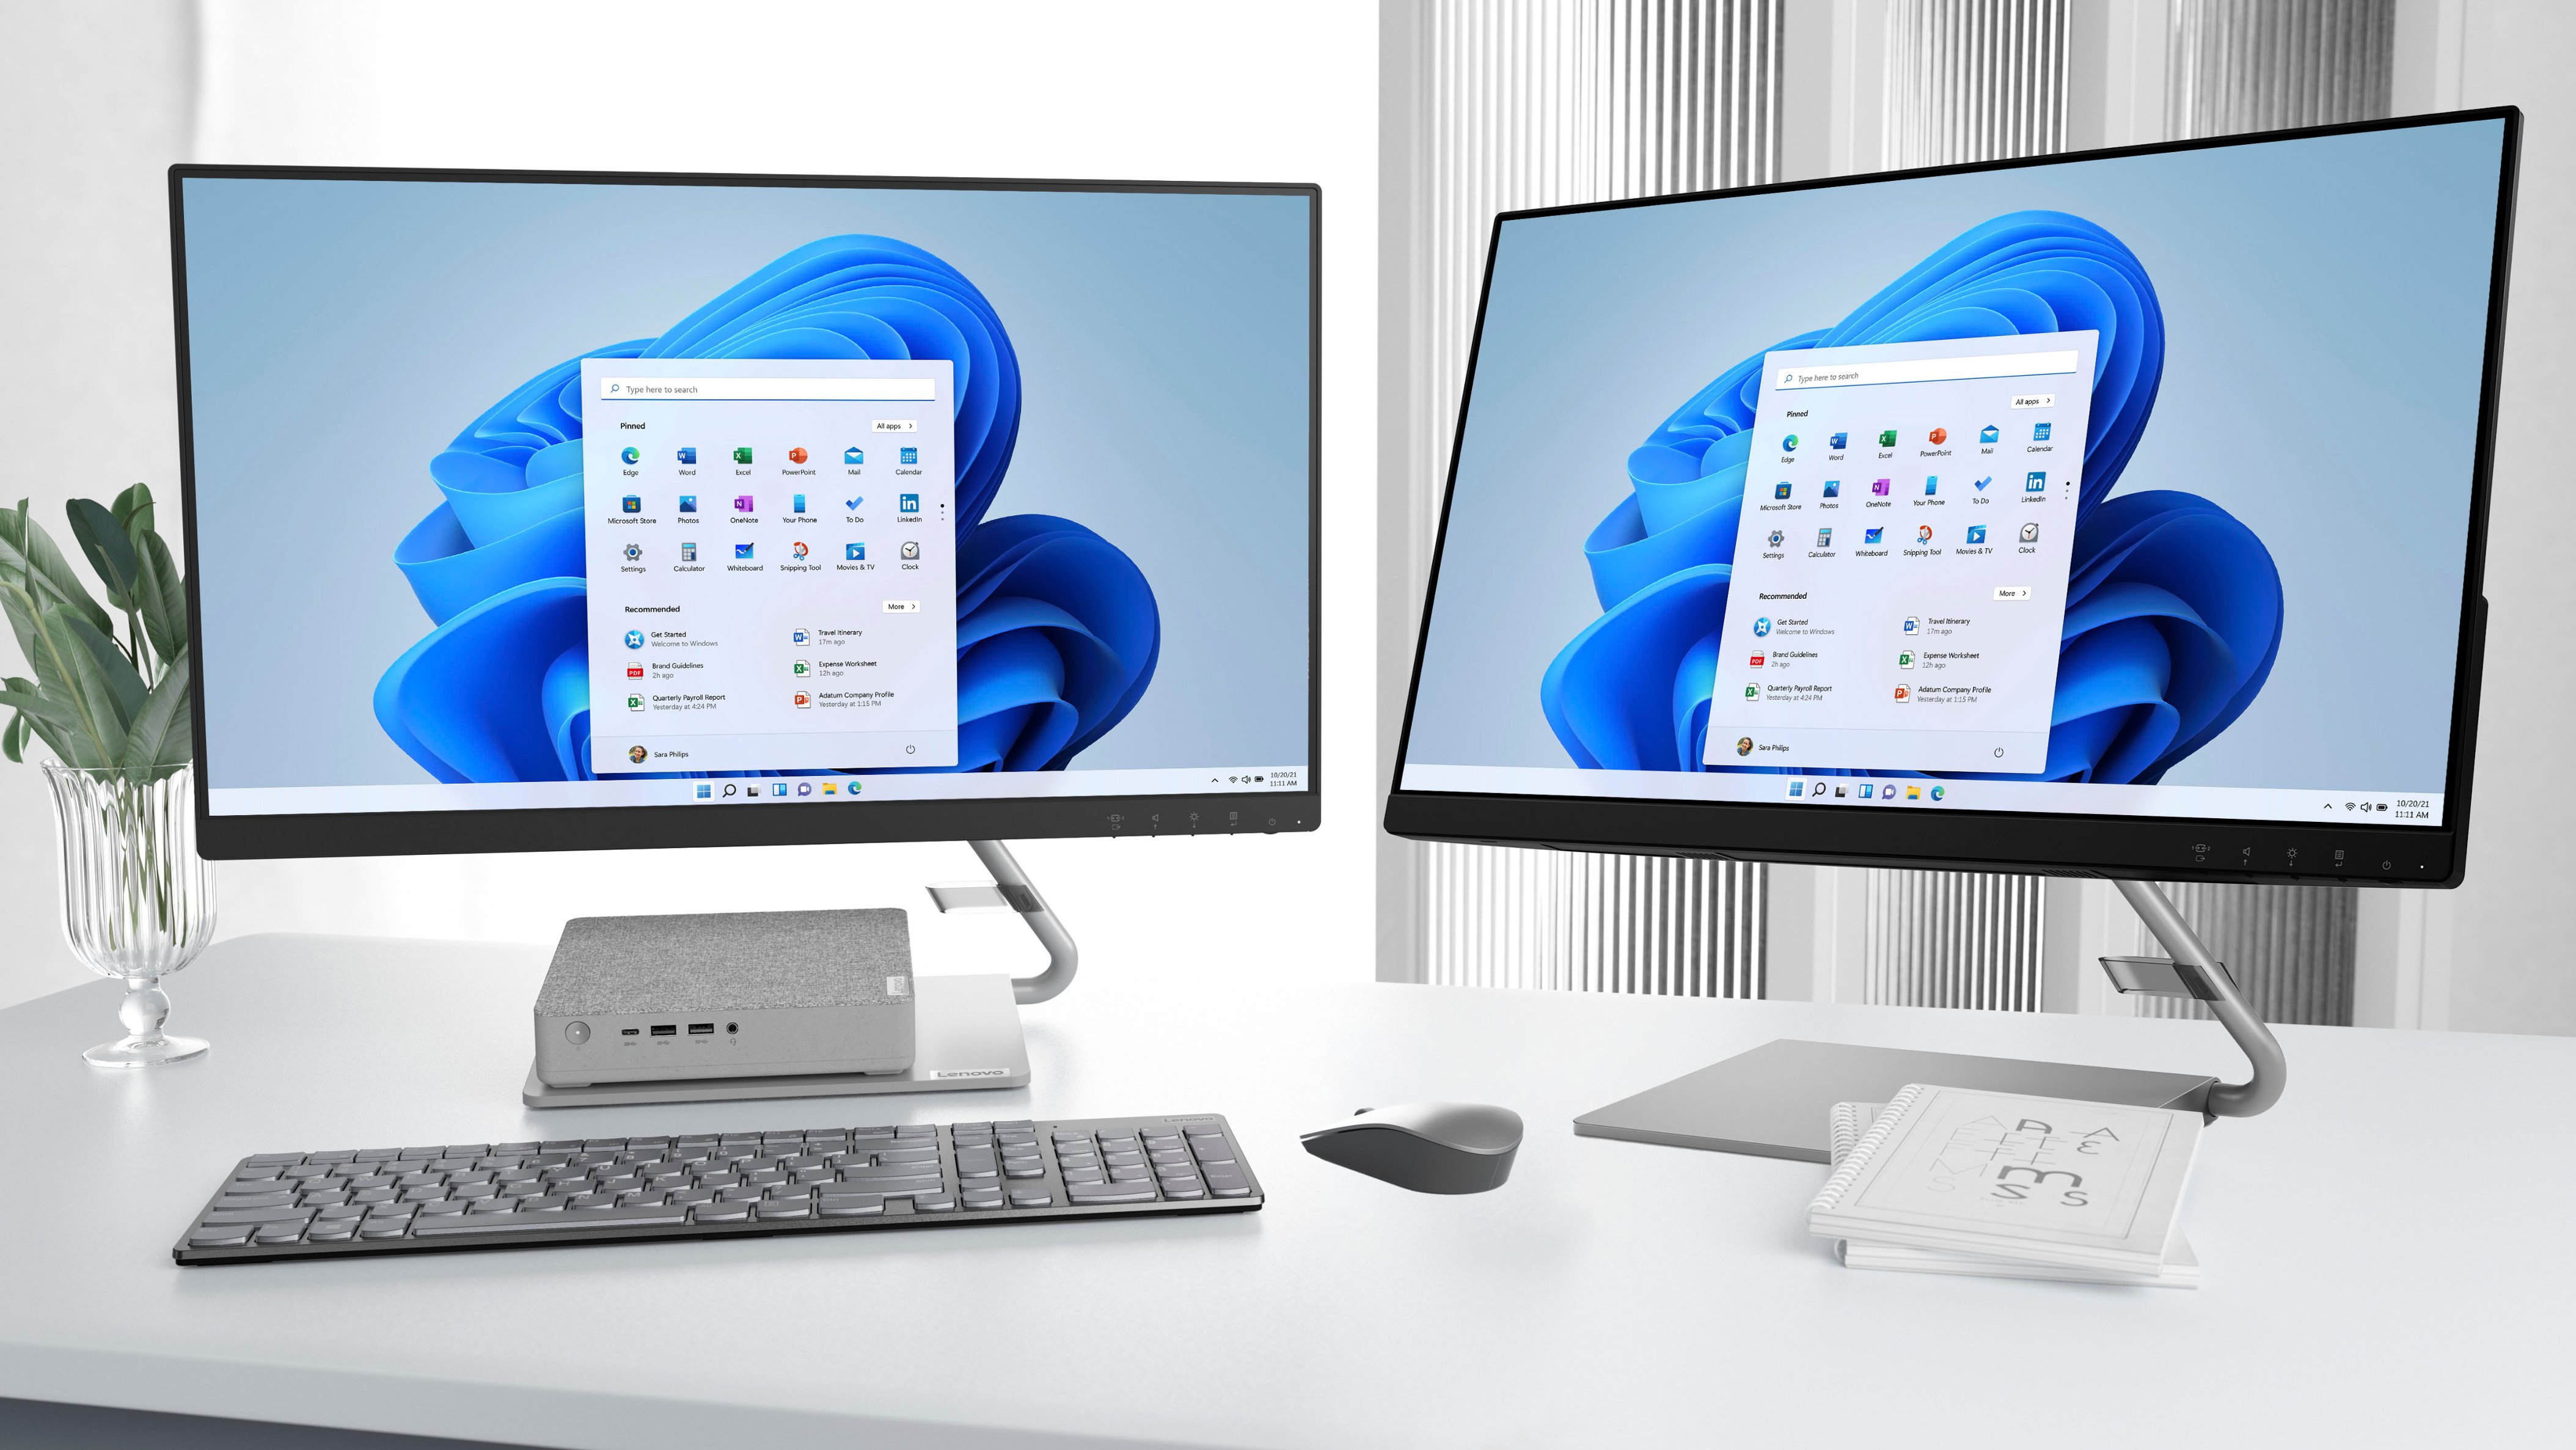 Lenovo IdeaCentre Mini Desktop review: Solid everyday performance